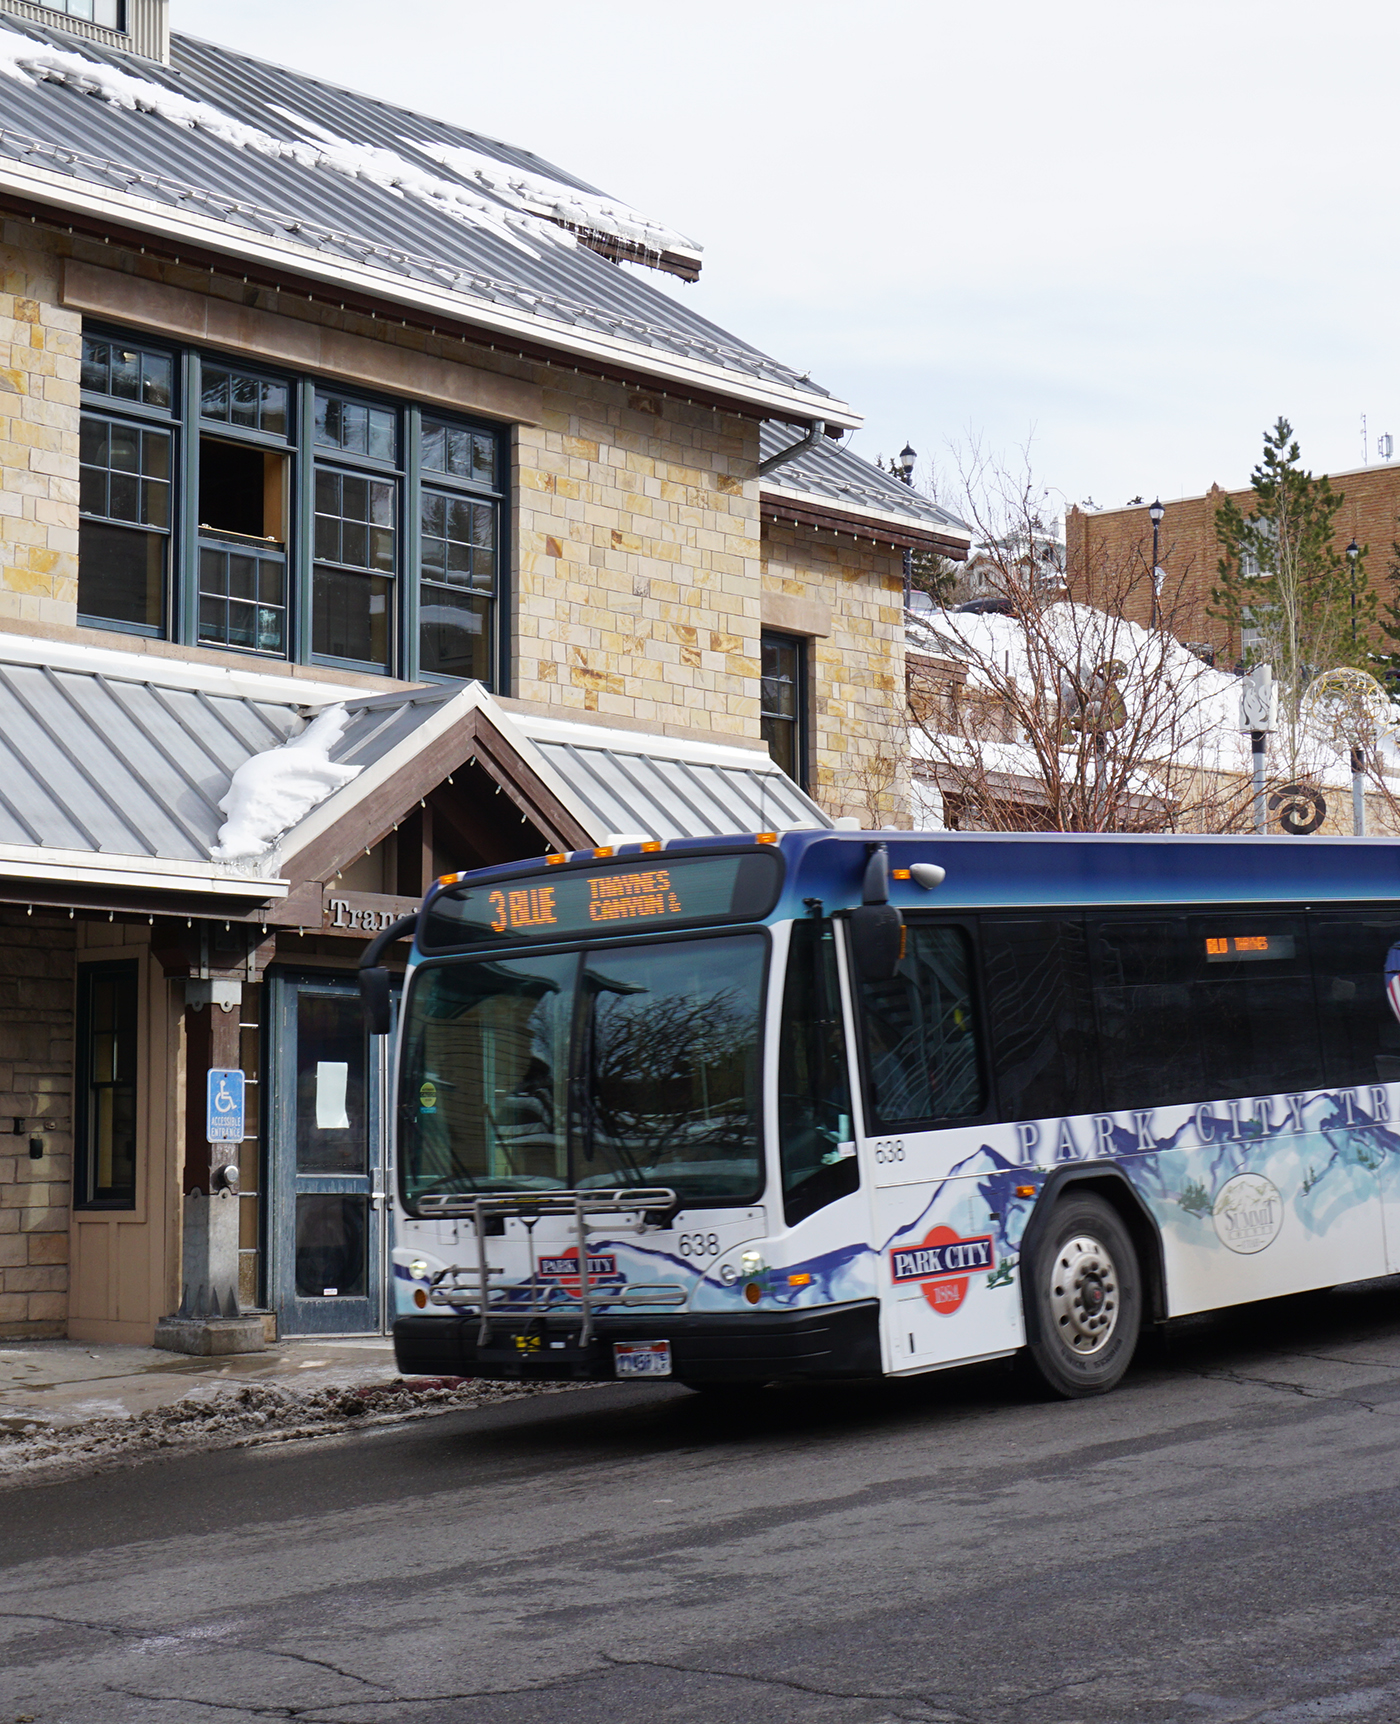 Hop on Board – Park City Rolls Out Winter Transportation Plans